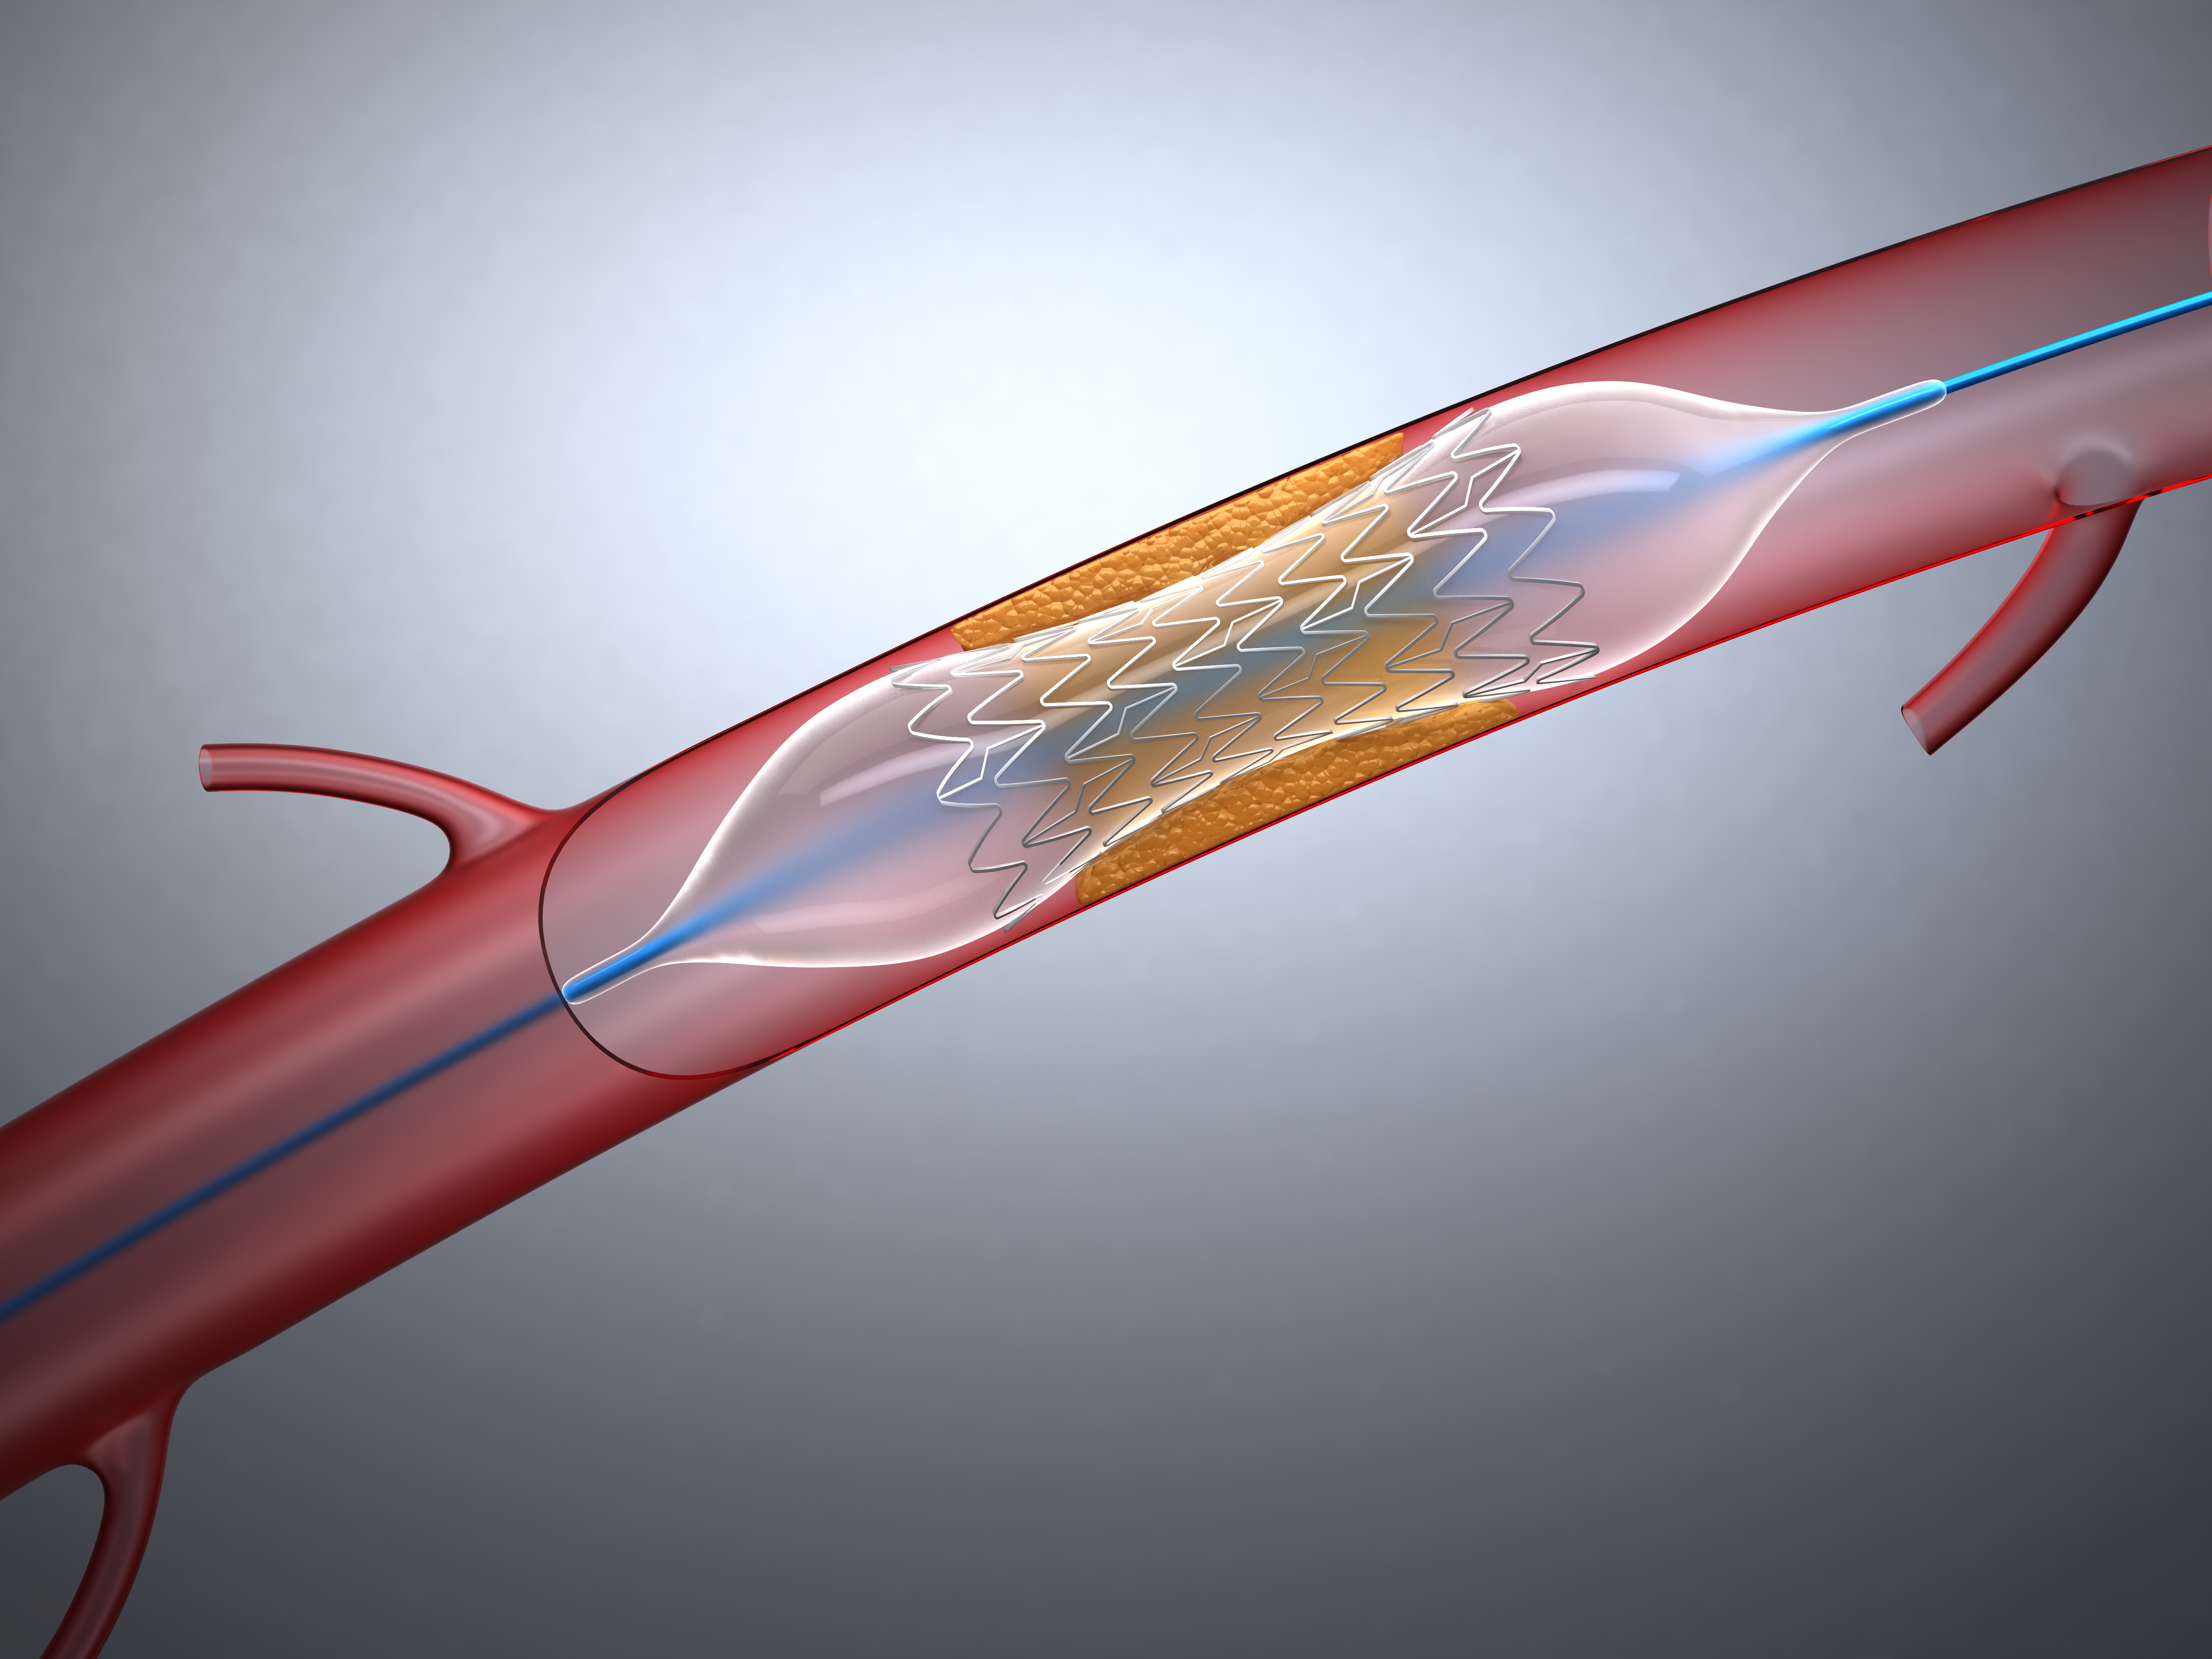 Intra-Aortic Balloon Pump for High-Risk Percutaneous Coronary Intervention